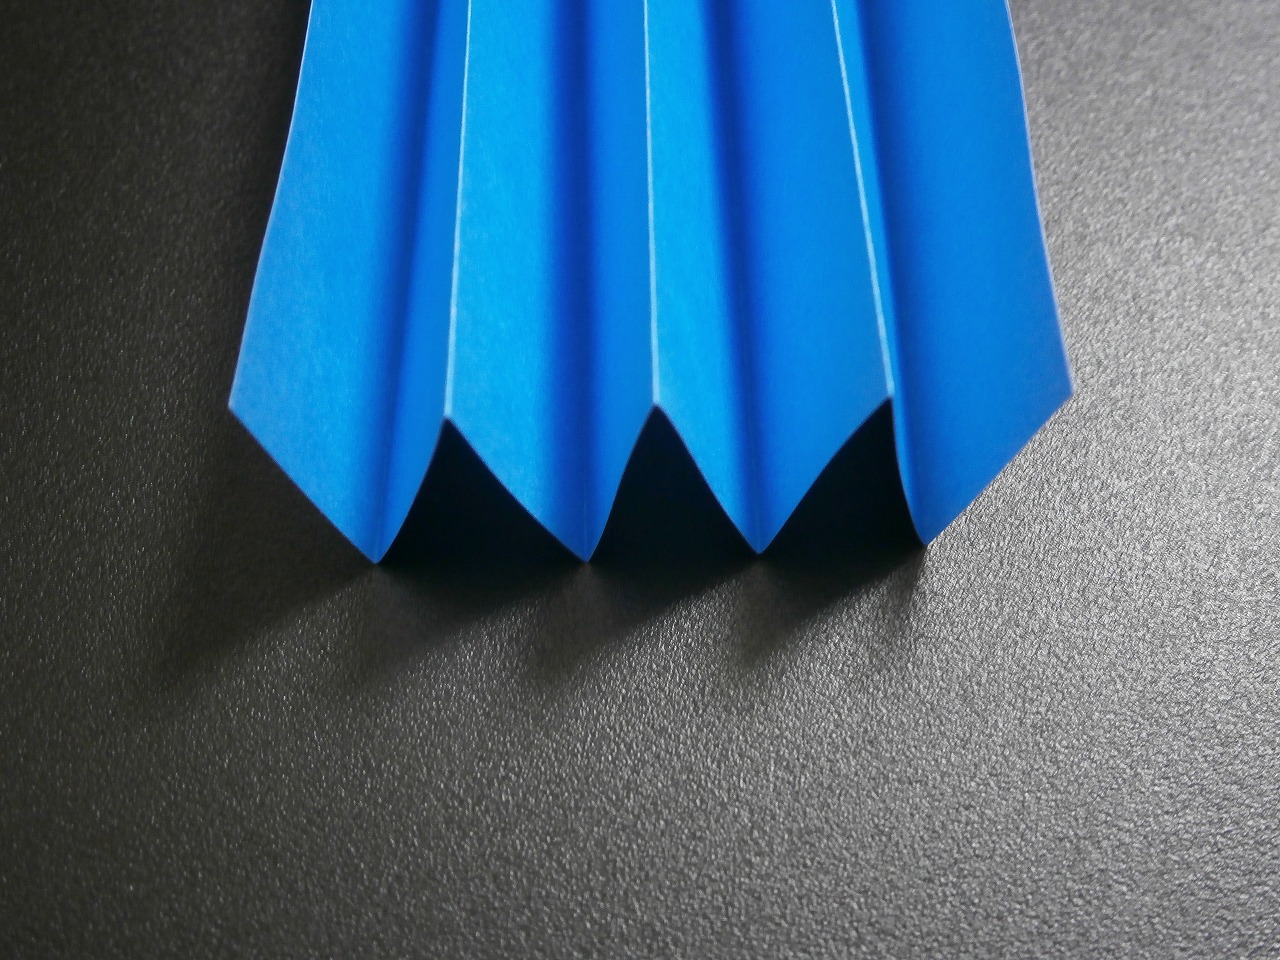 KATAKOTO ORIGAMI "Pleat fold" Origami basic technique